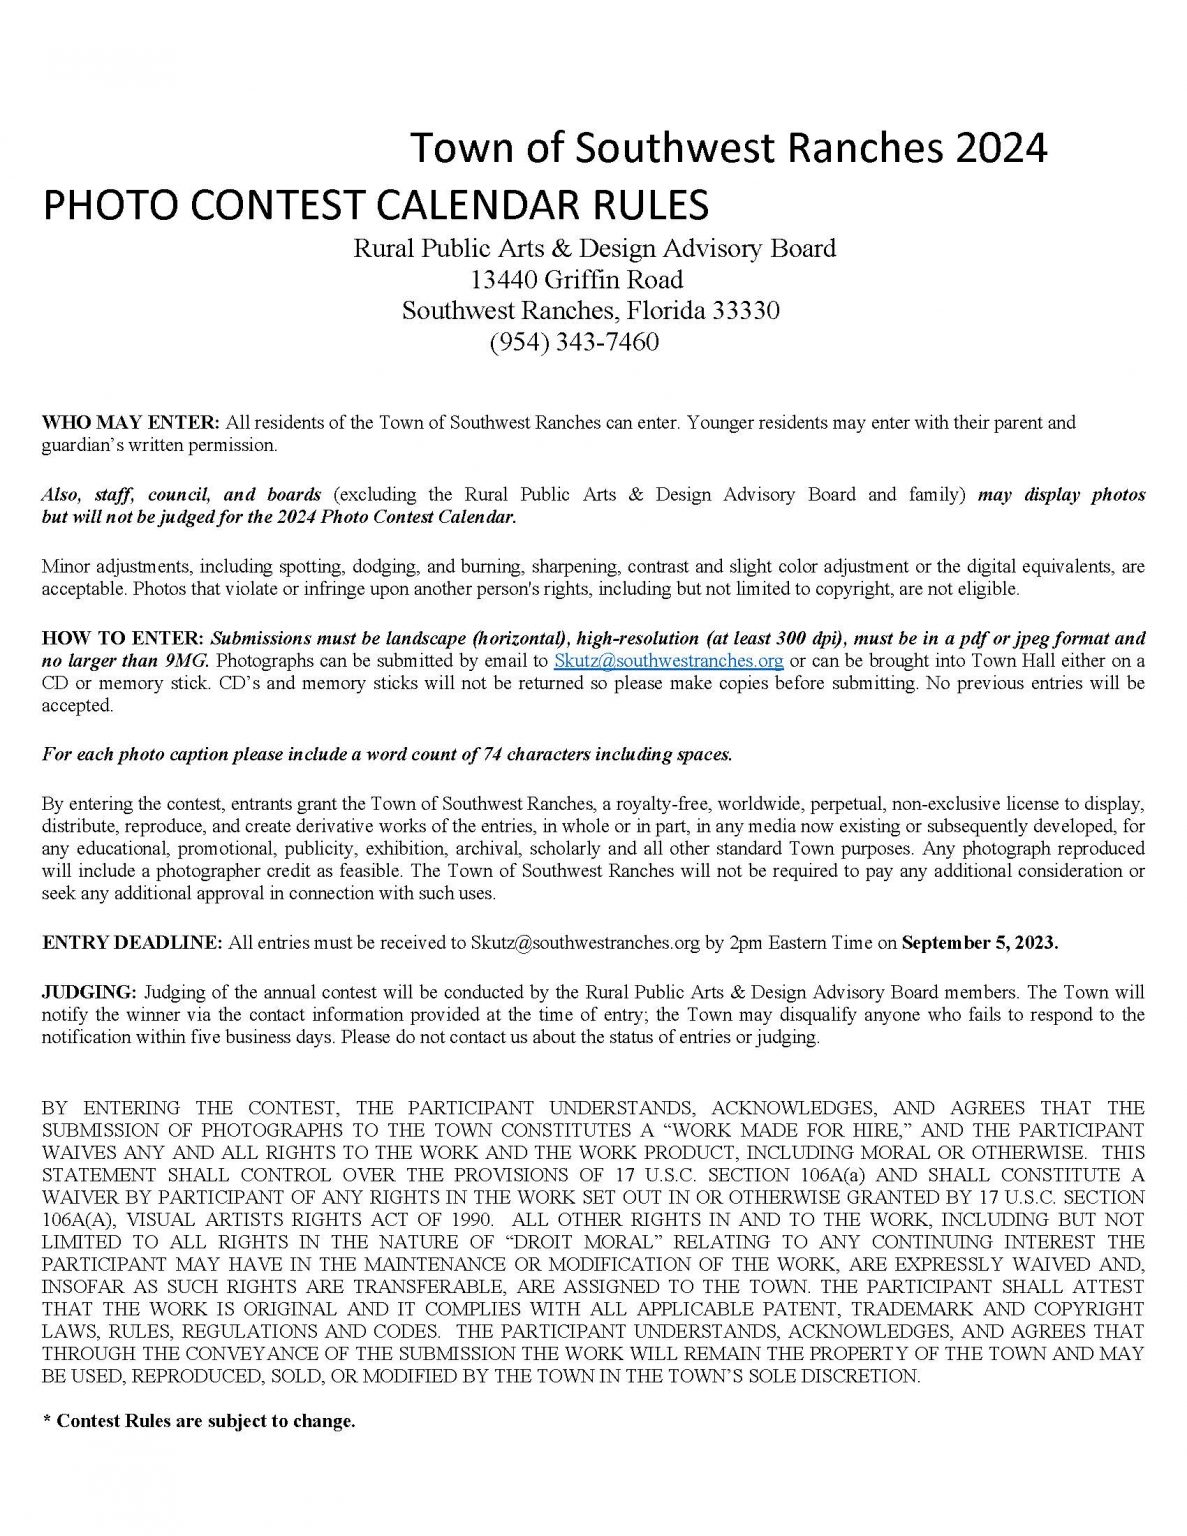 Photo Contest Calendar Rules 2024 1 1187x1536 